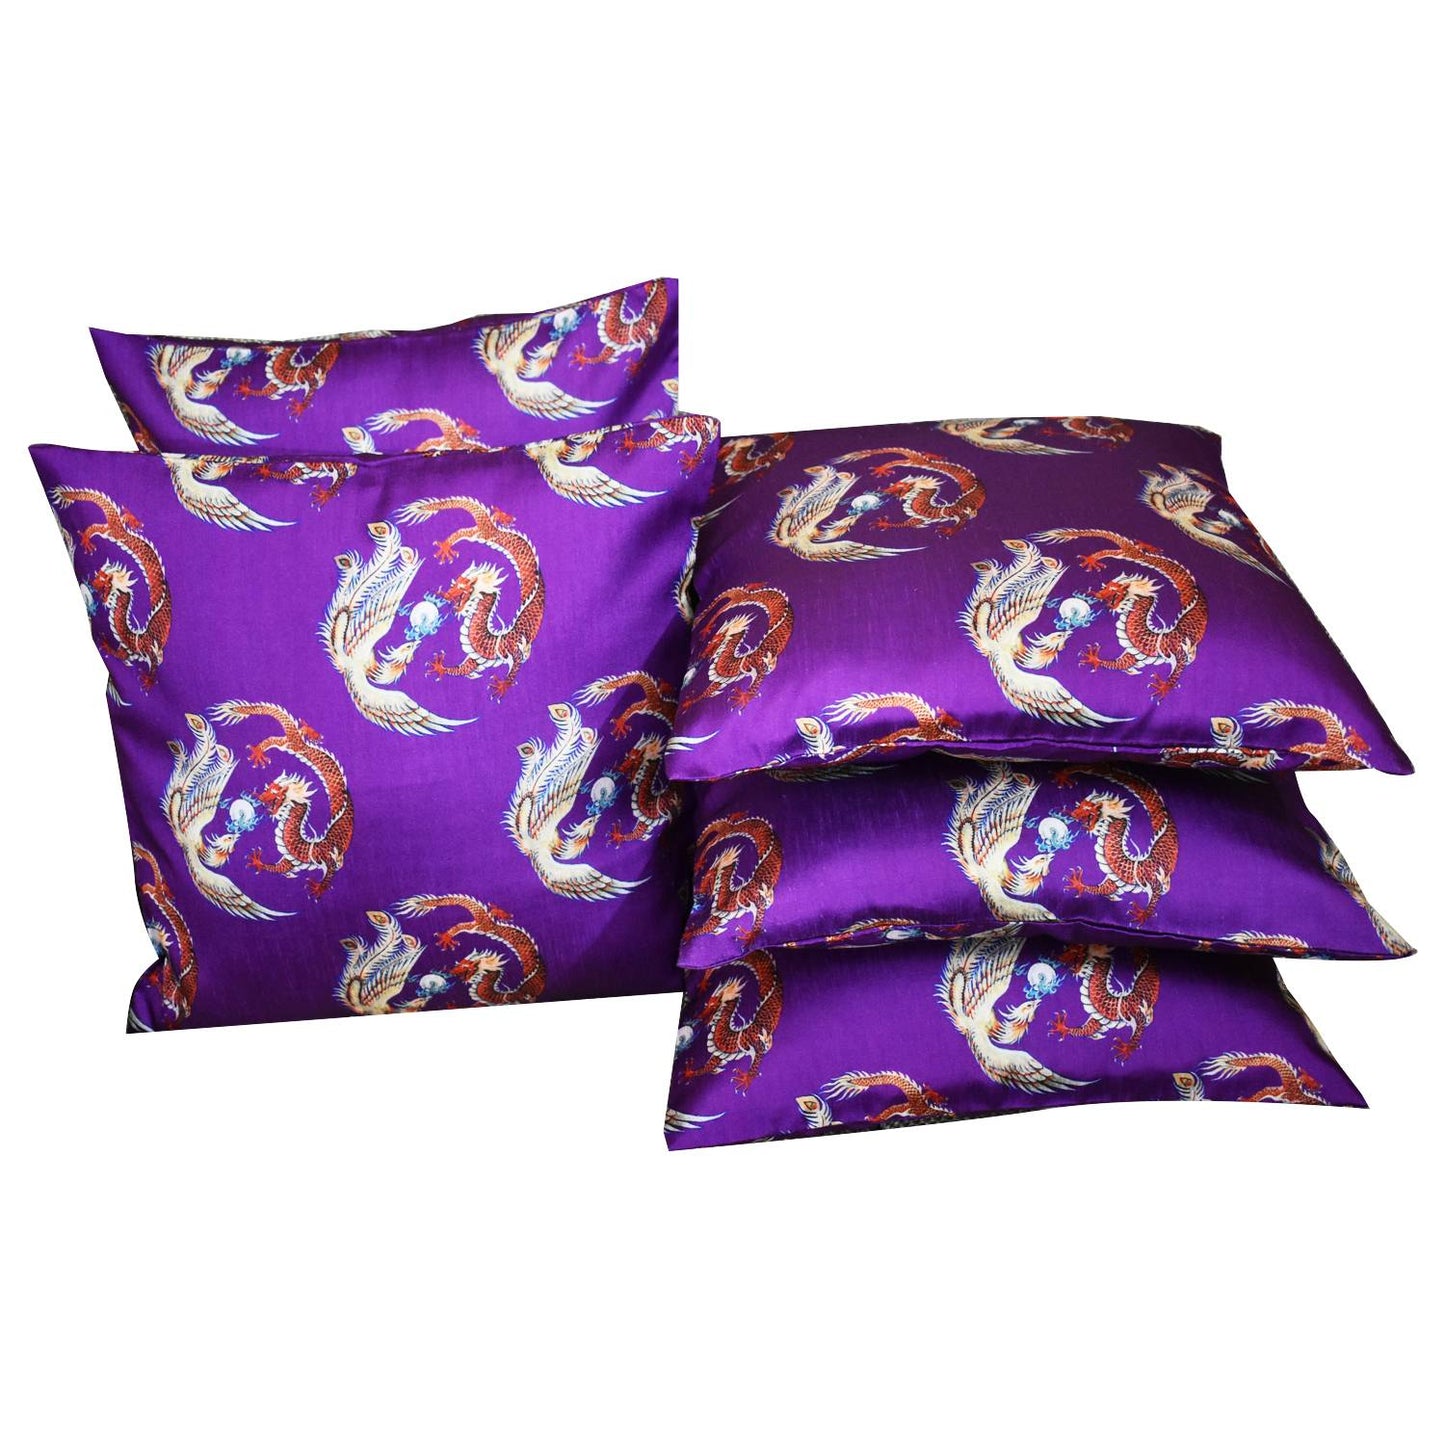 Ying Yang Cushions (set of five)